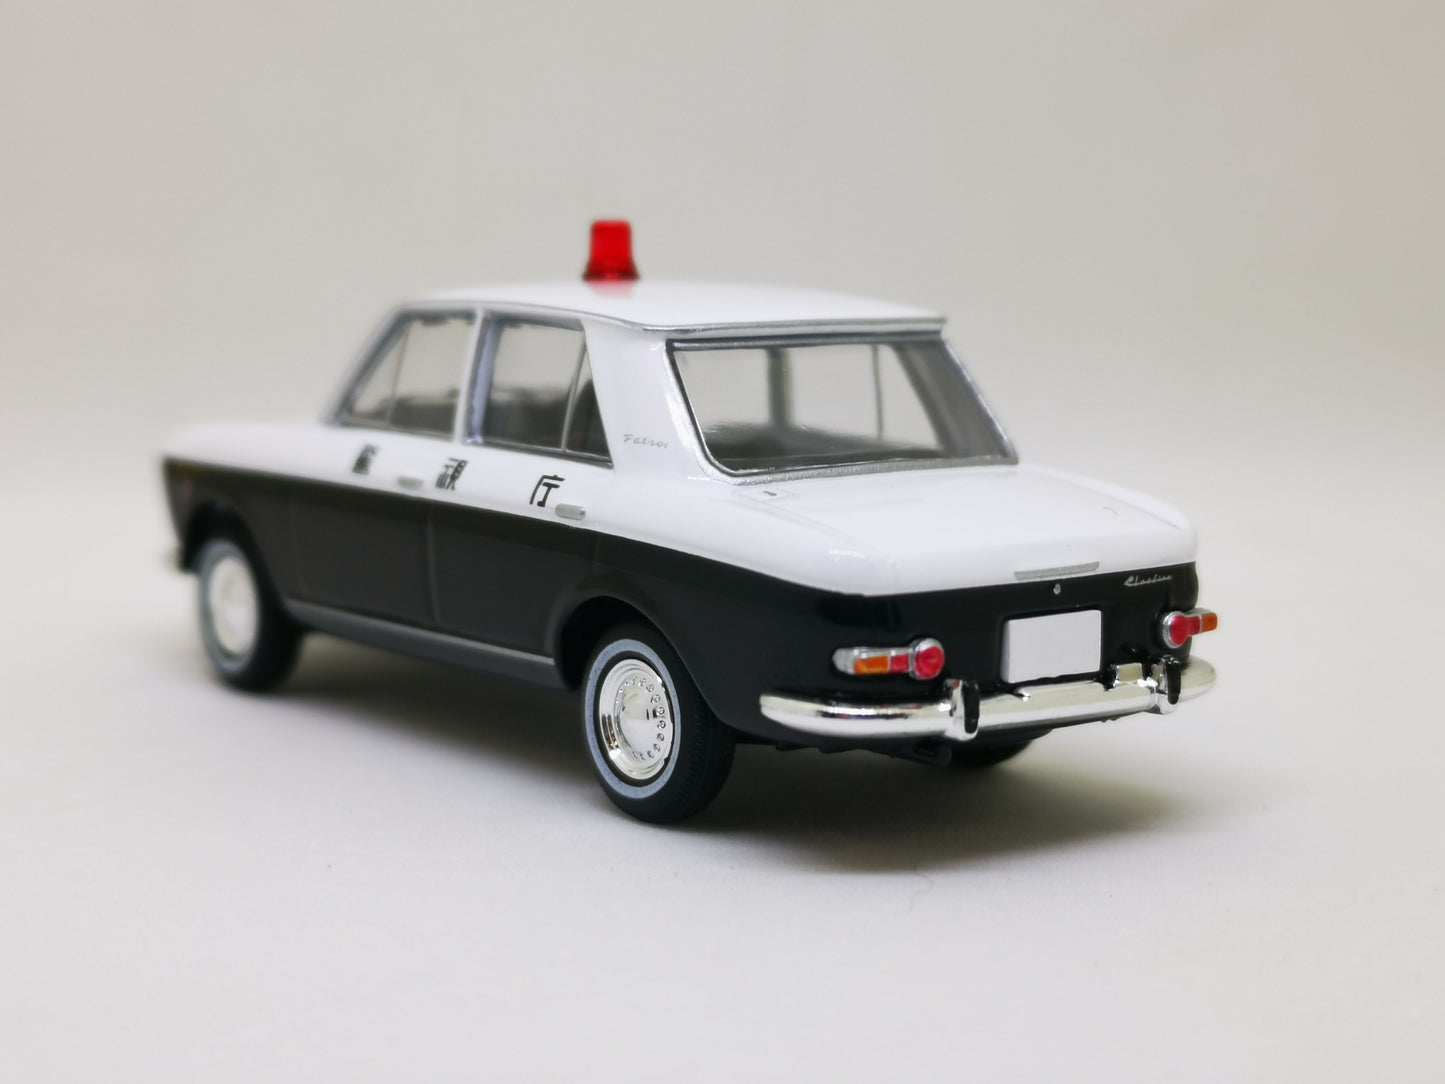 Tomica Limited Vintage
LV-183a Nissan/Datsun Bluebird 510
Japan Patrol Car